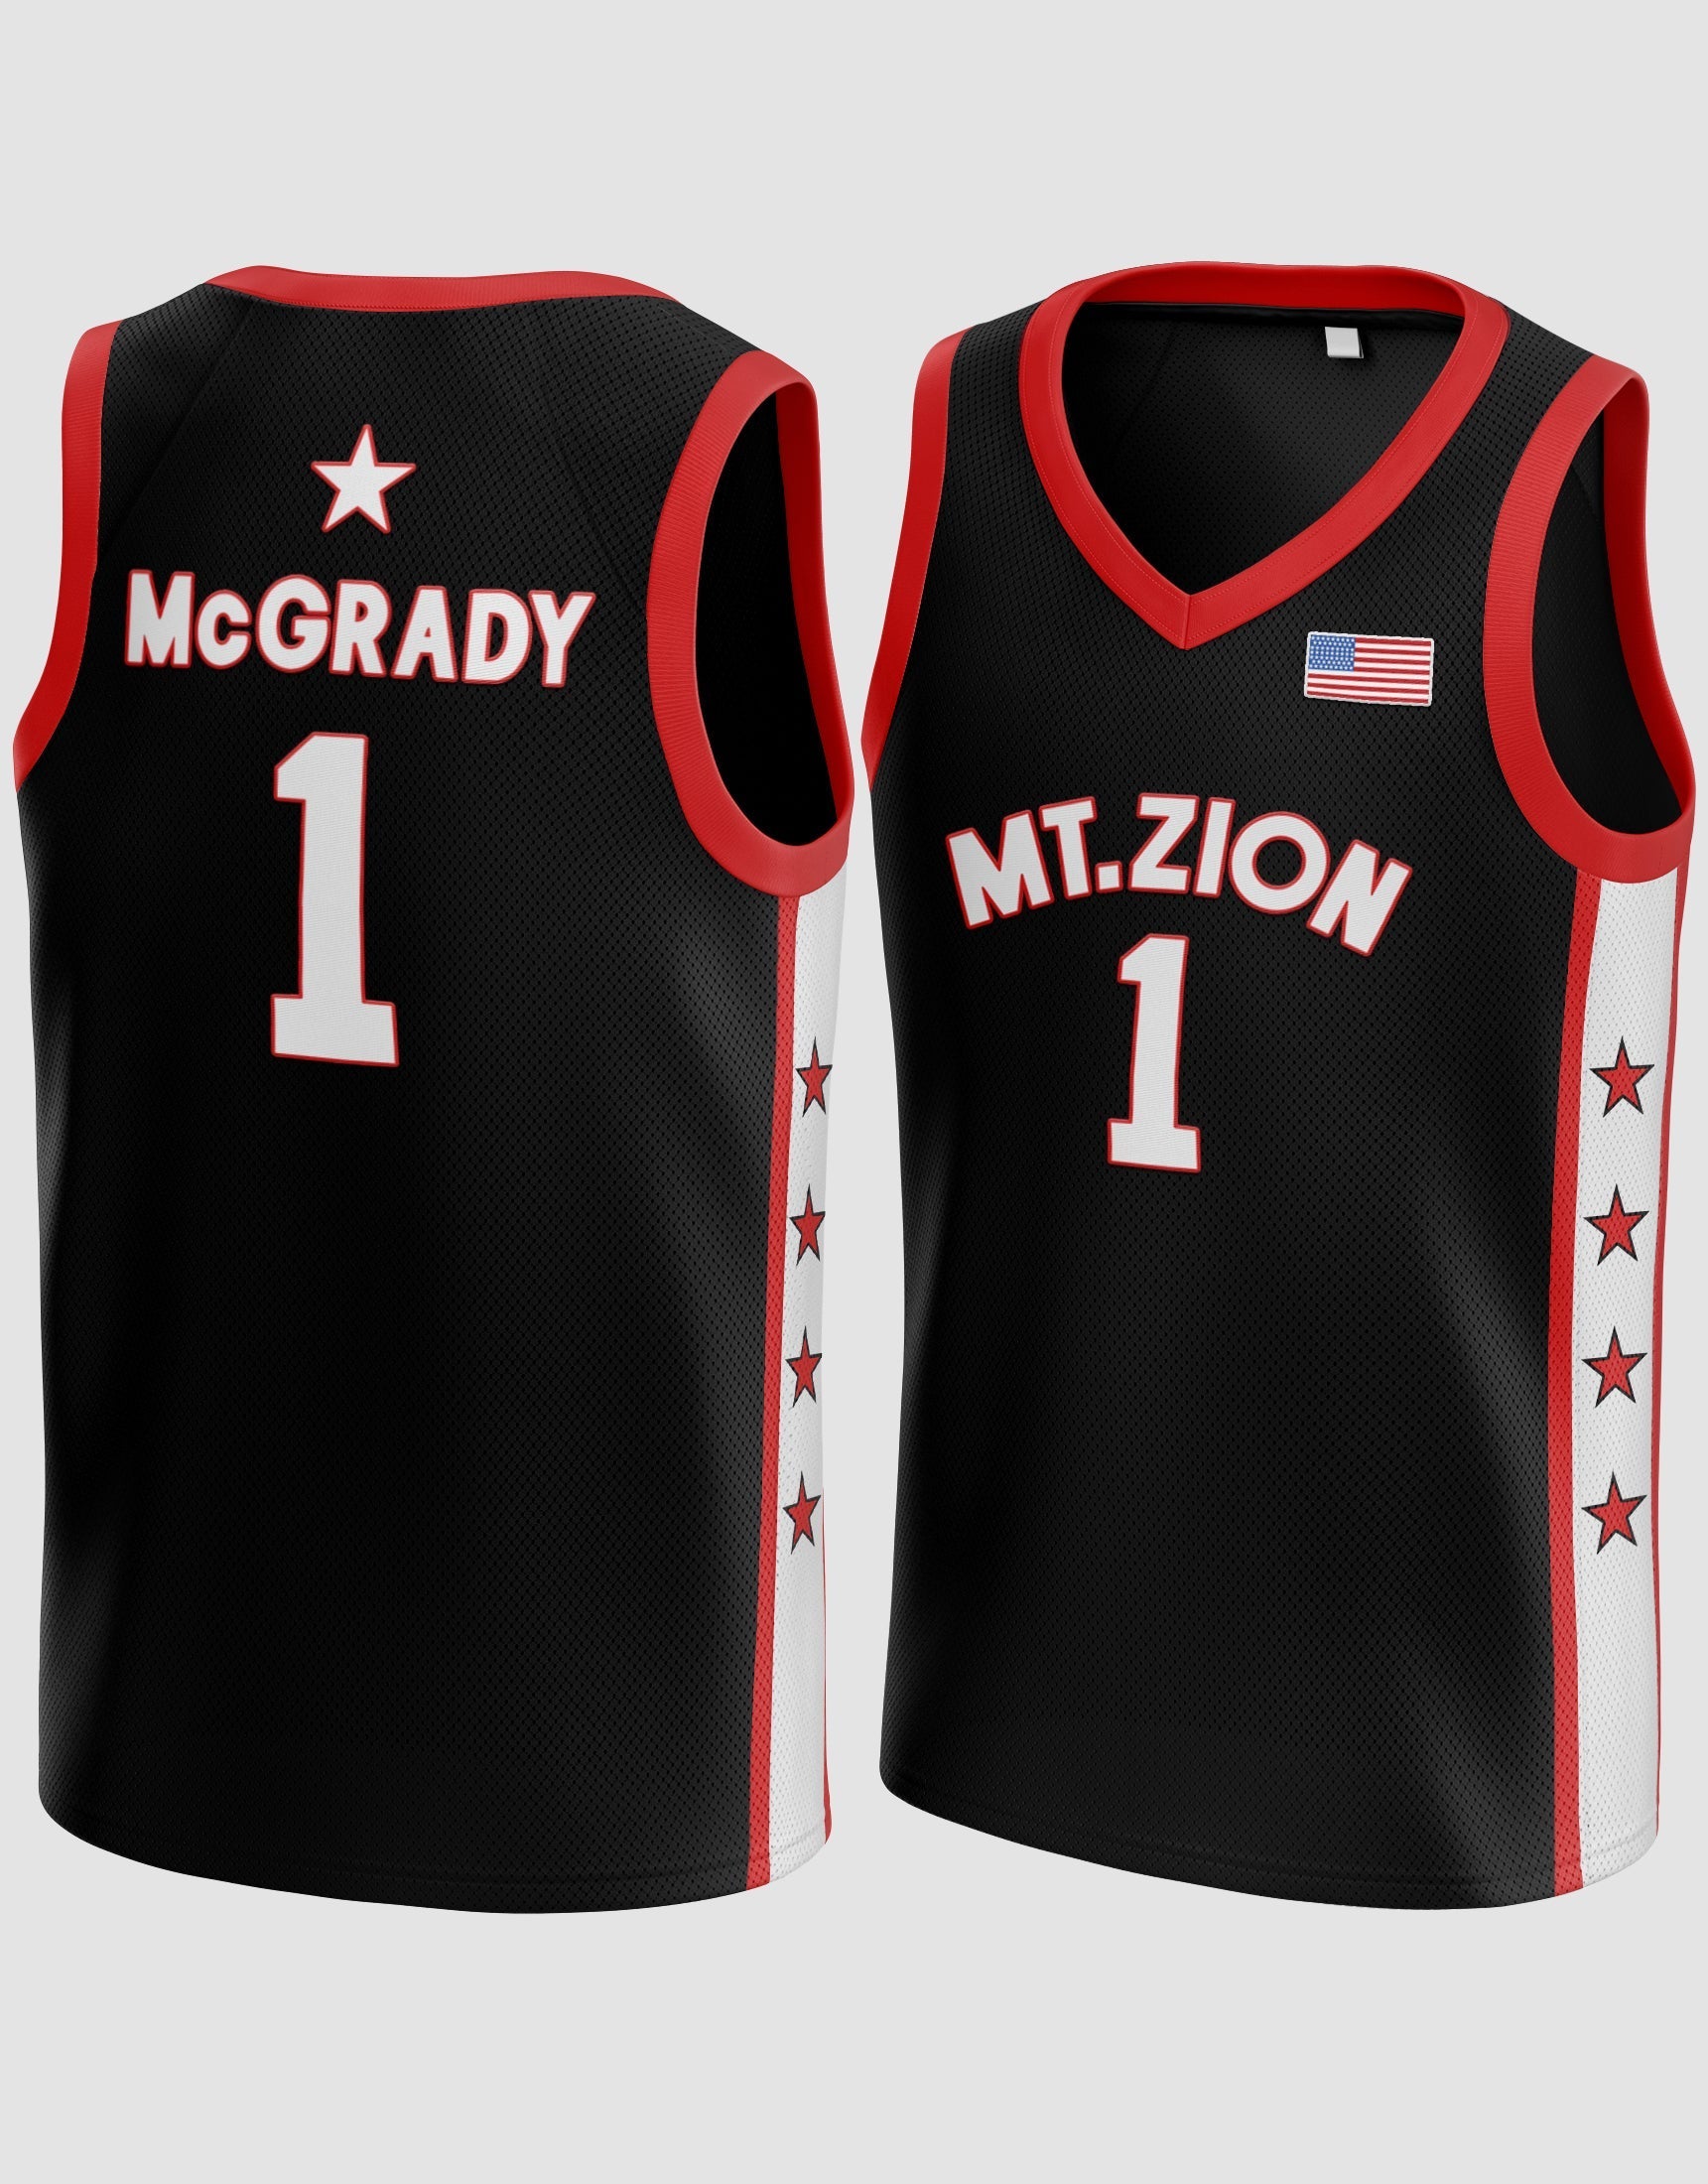 Tracy Mcgrady Retro High School Basketball Jersey Mount Zion 